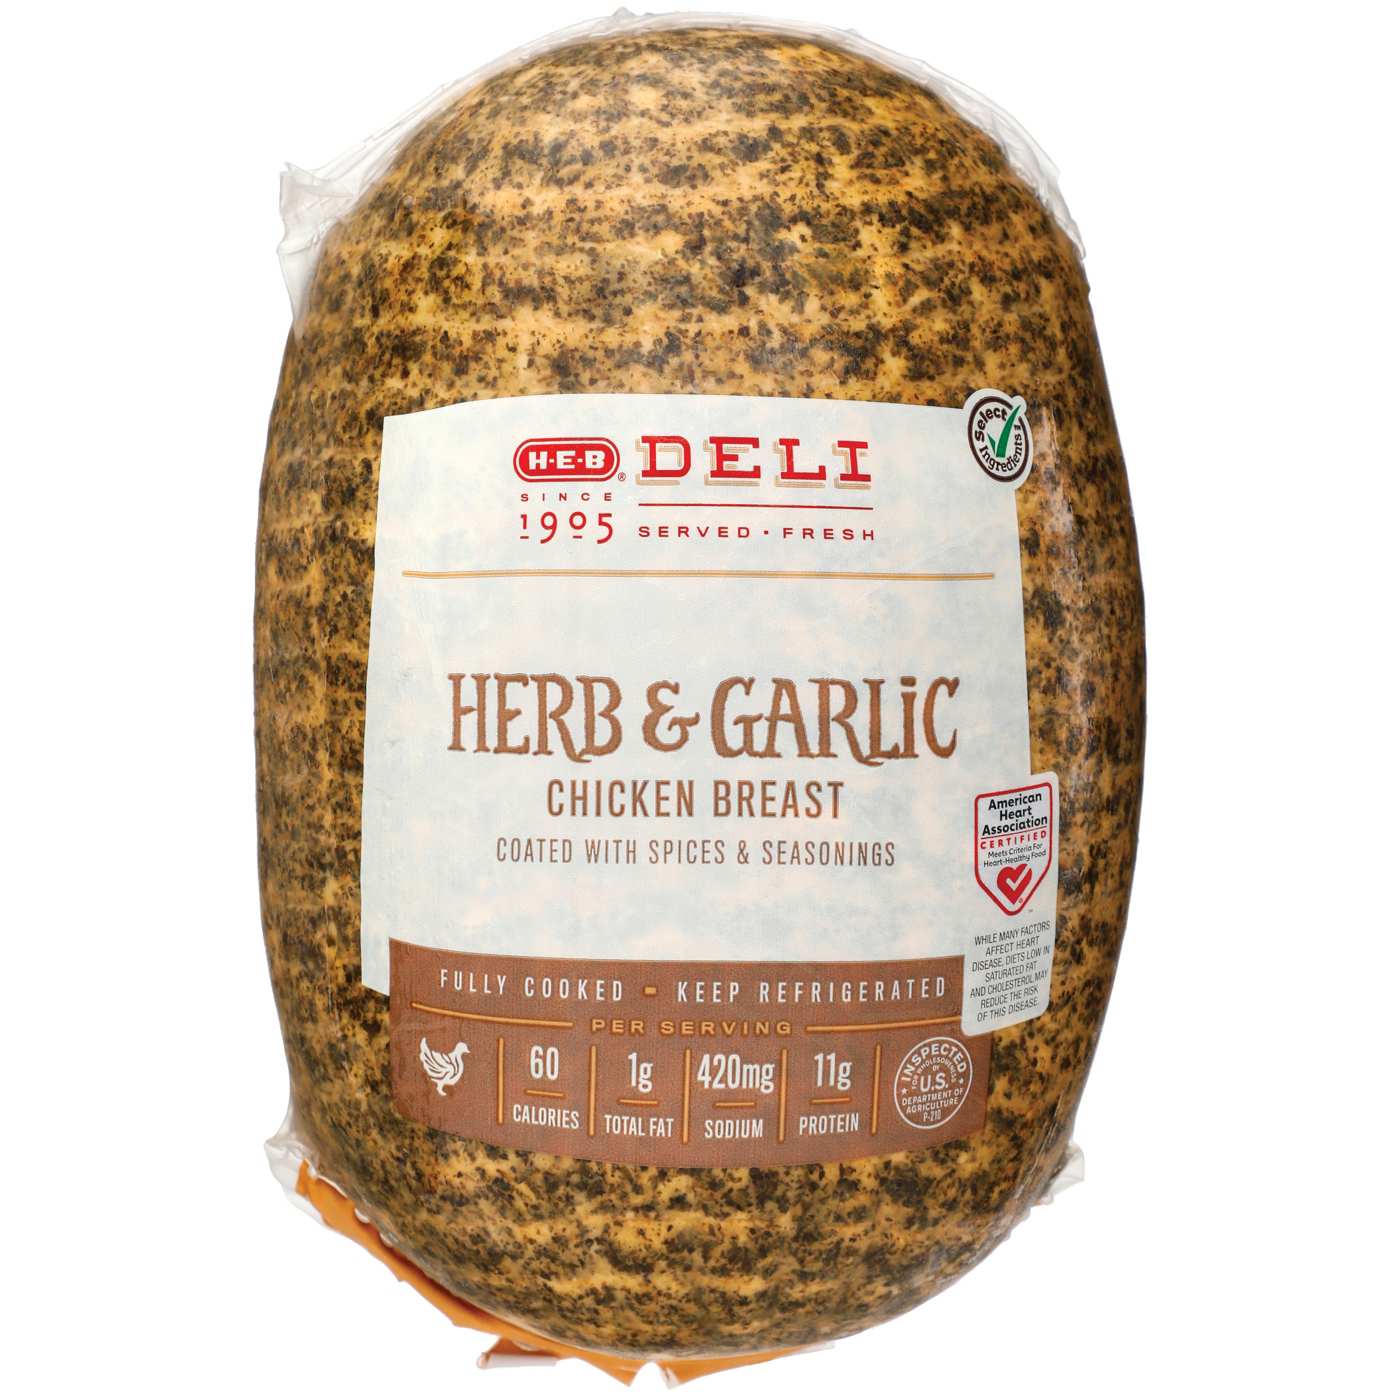 H-E-B Deli Sliced Herb & Garlic Chicken Breast; image 1 of 2